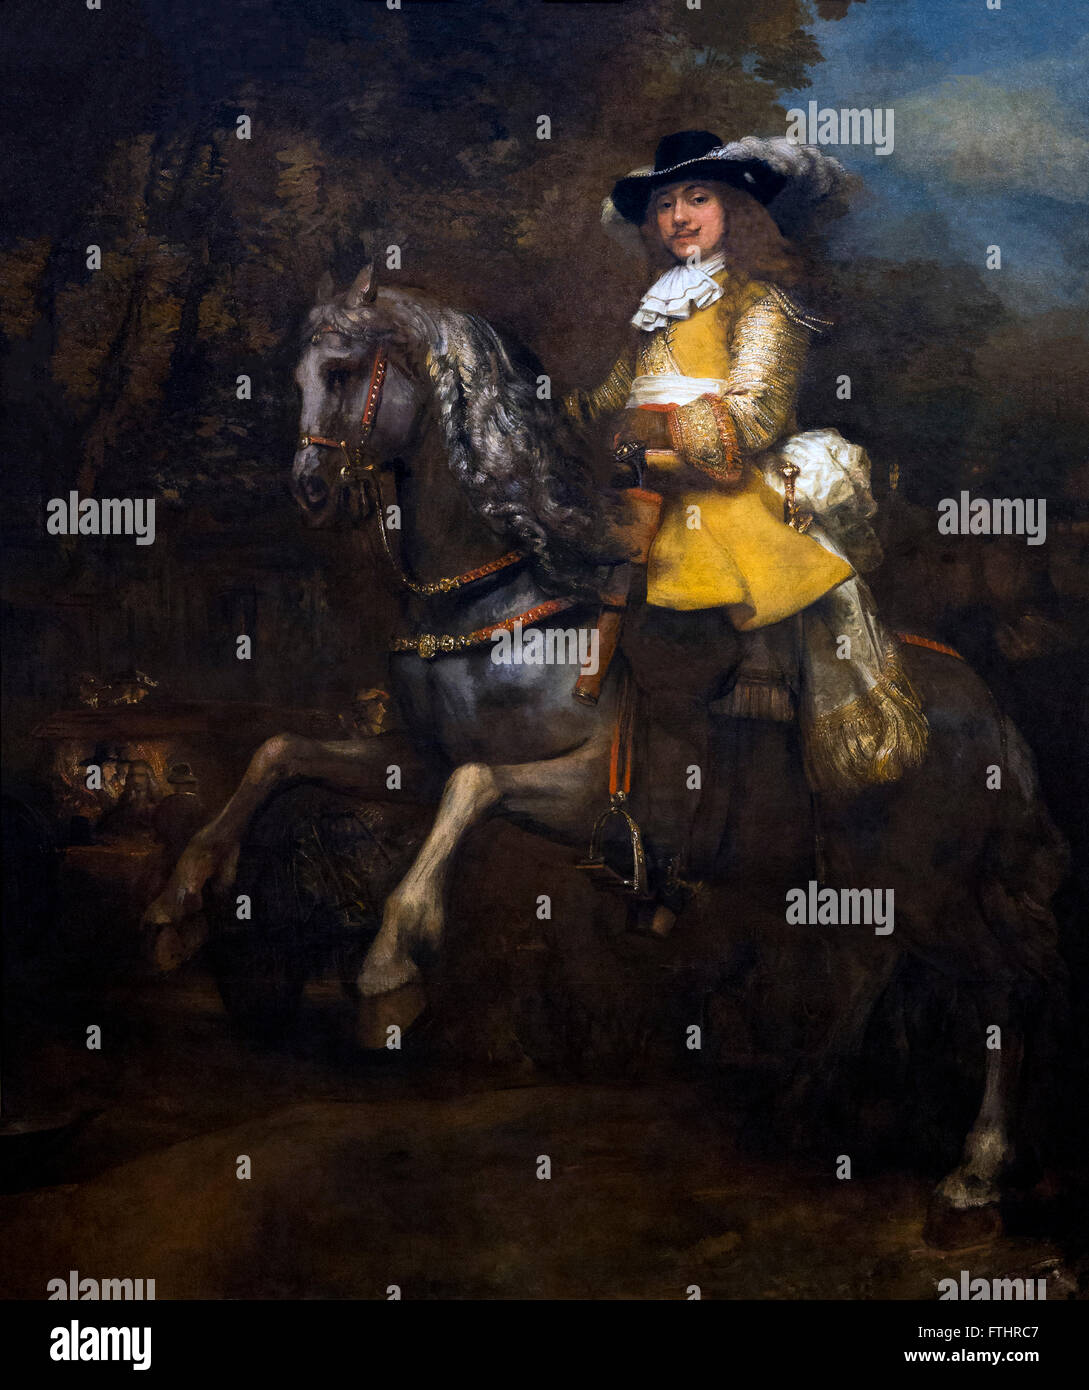 Retrato de Frederick Rihel a caballo, de Rembrandt, circa 1663 Foto de stock